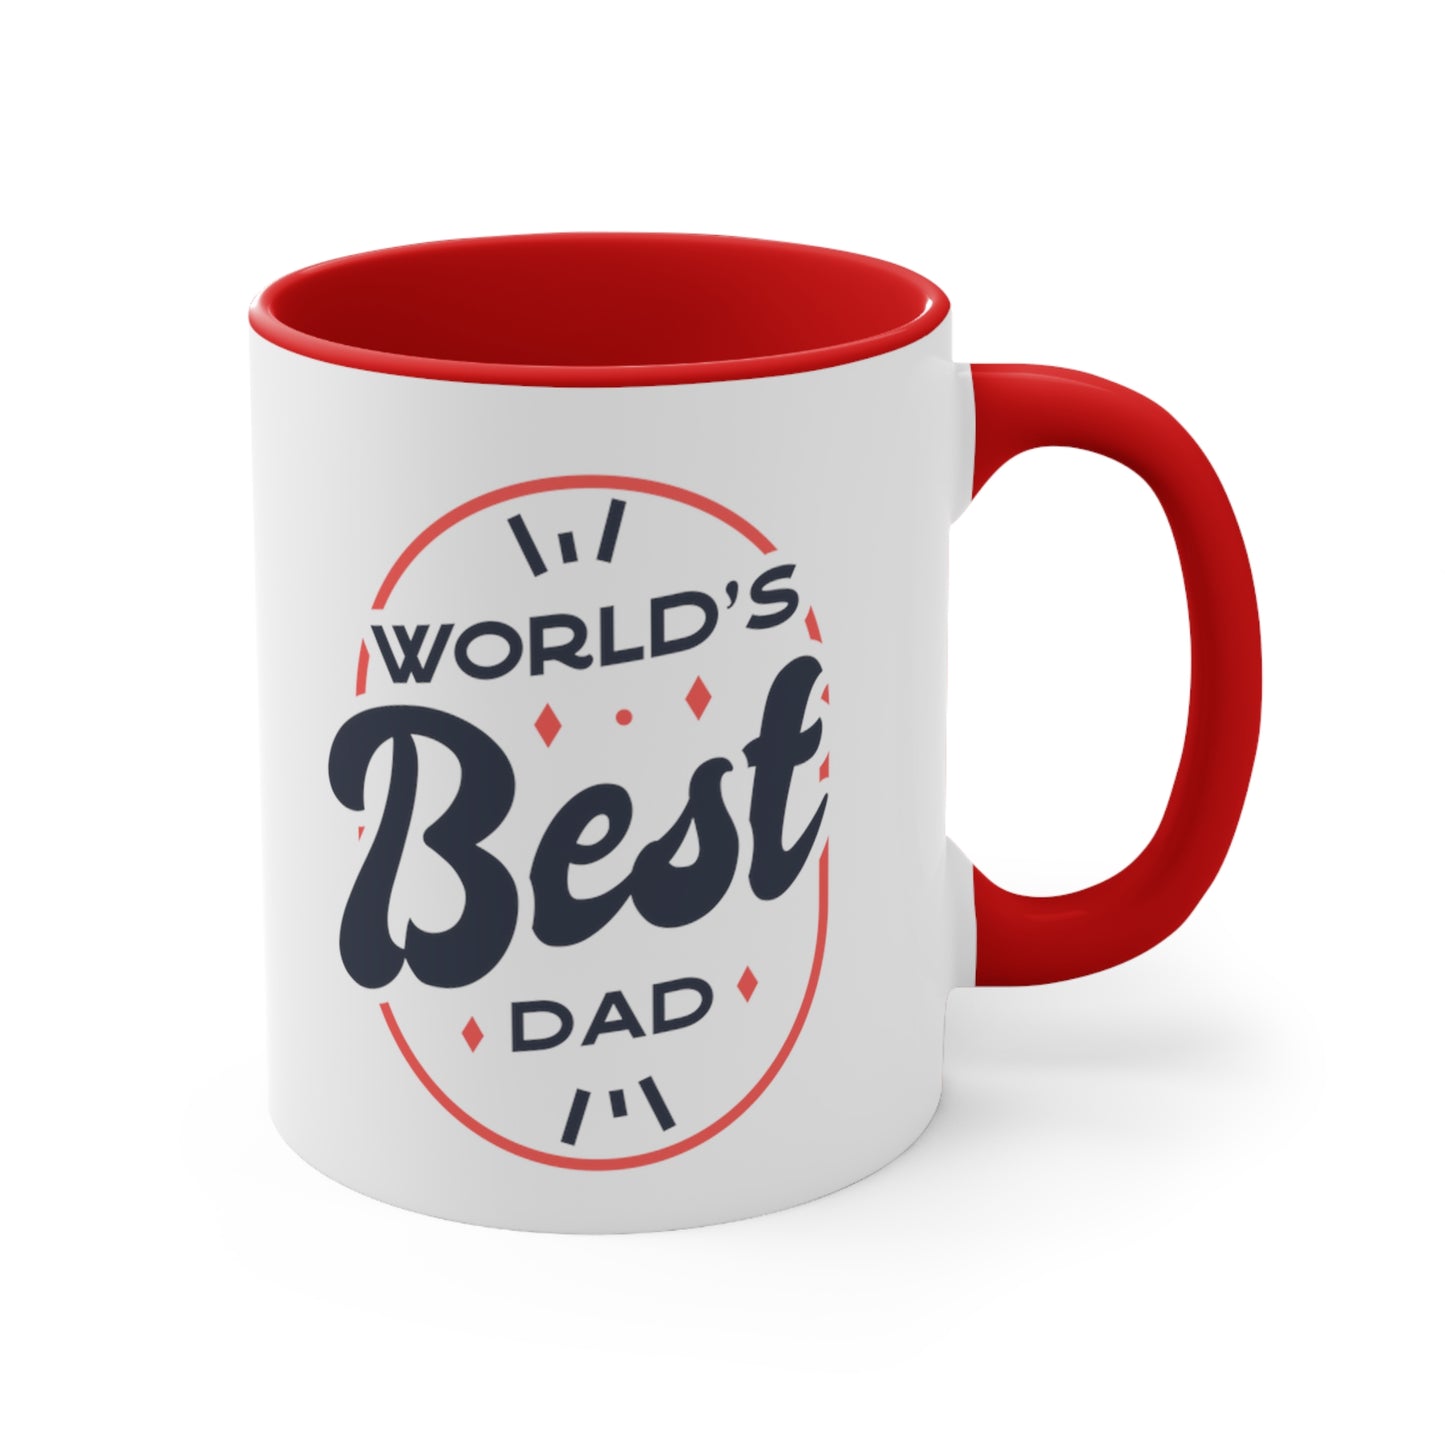 World's Best Dad Mug, 11 oz